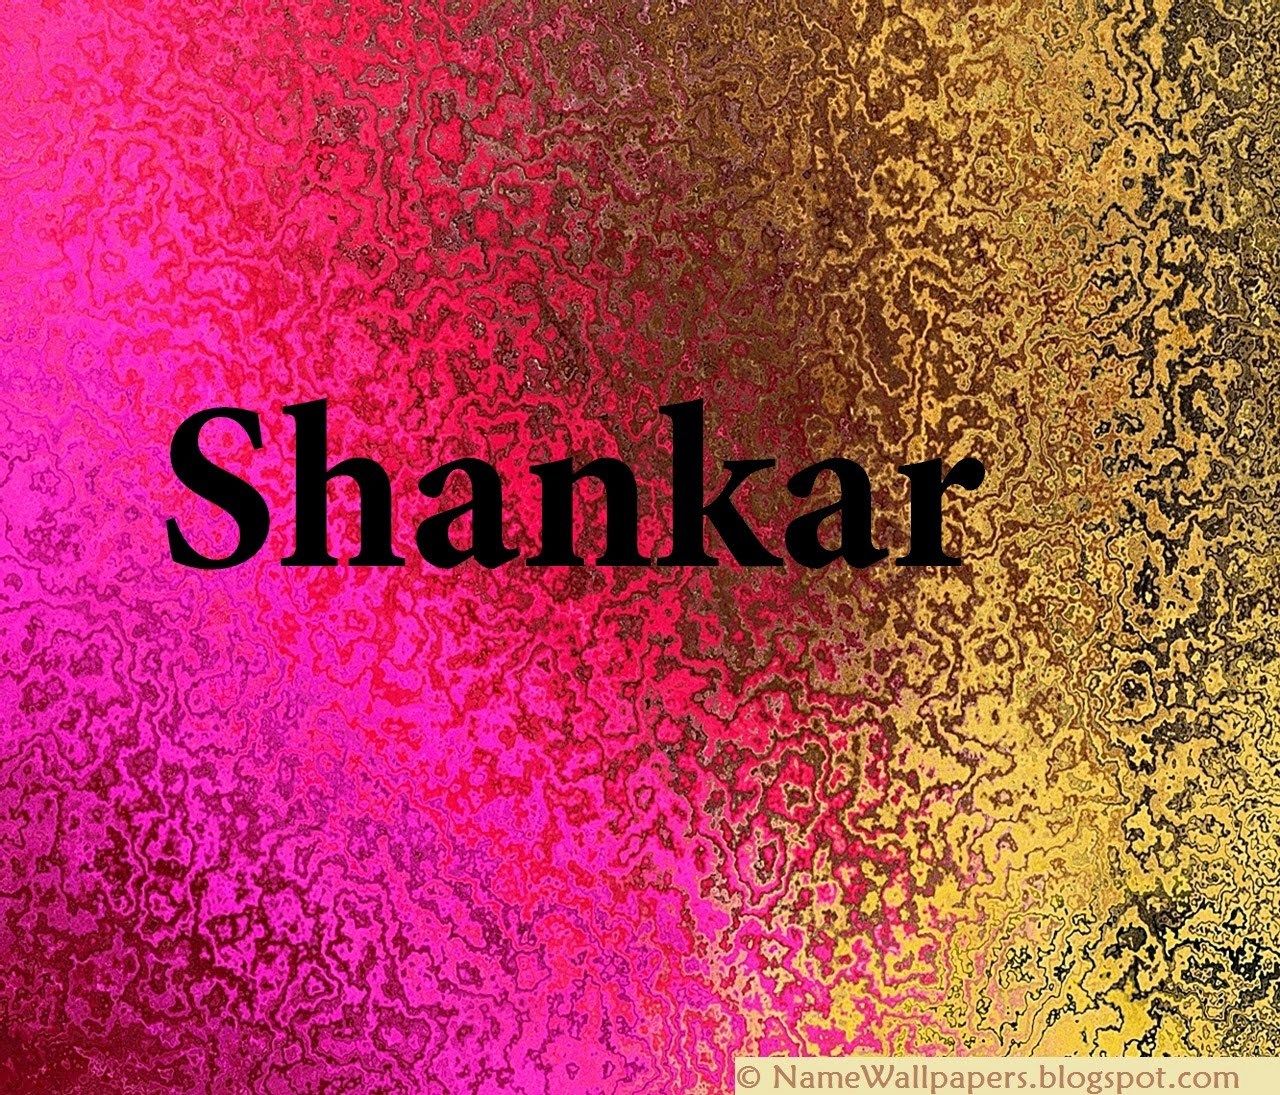 Shahid Name Images Hd - HD Wallpaper 